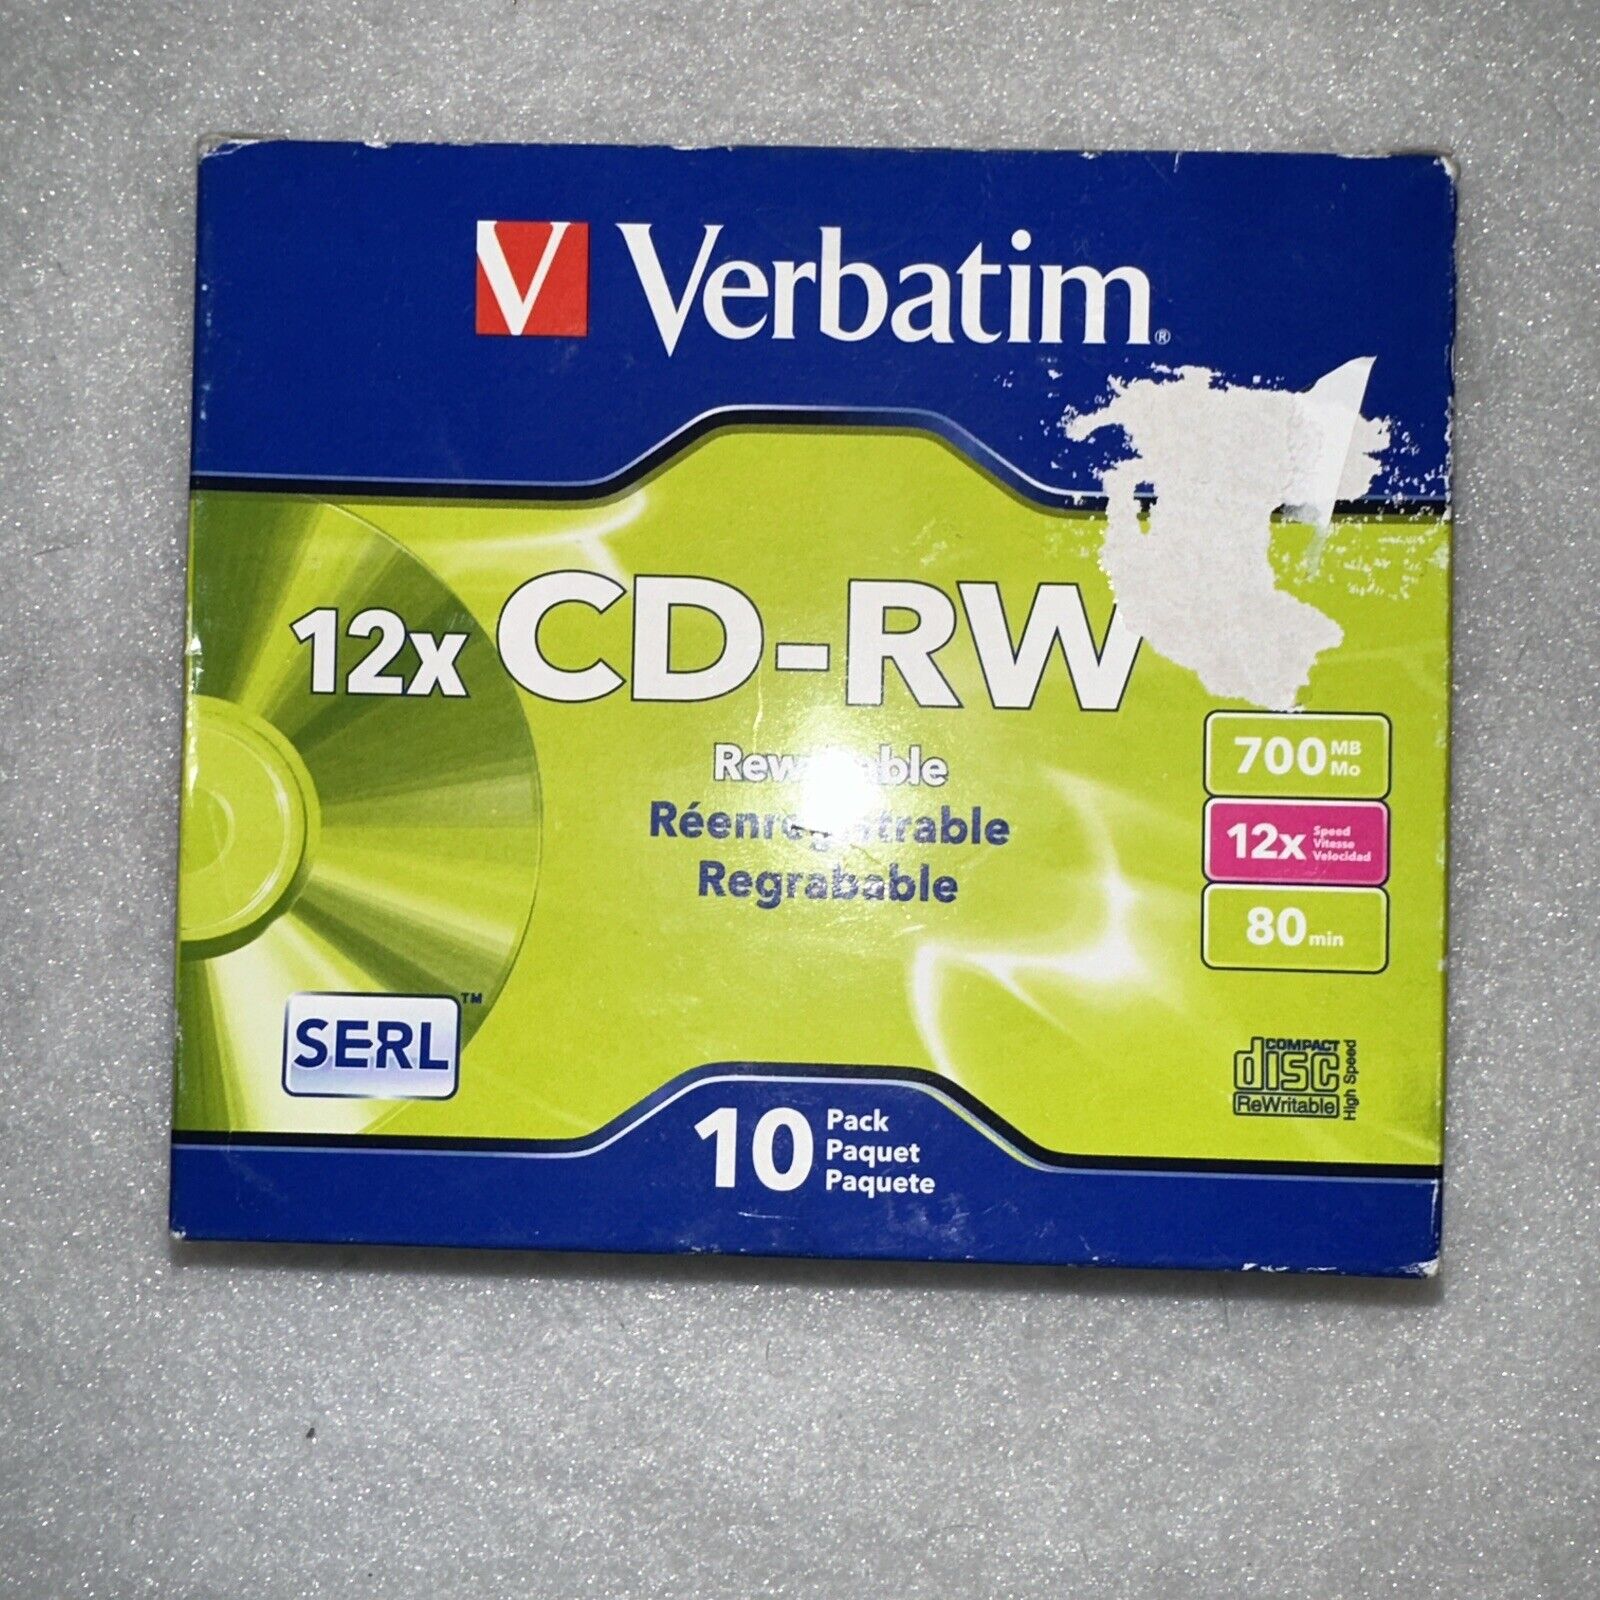 Verbatim CD-RW 700MB 12X High Speed Rewritable 10 Pack, - New Sealed